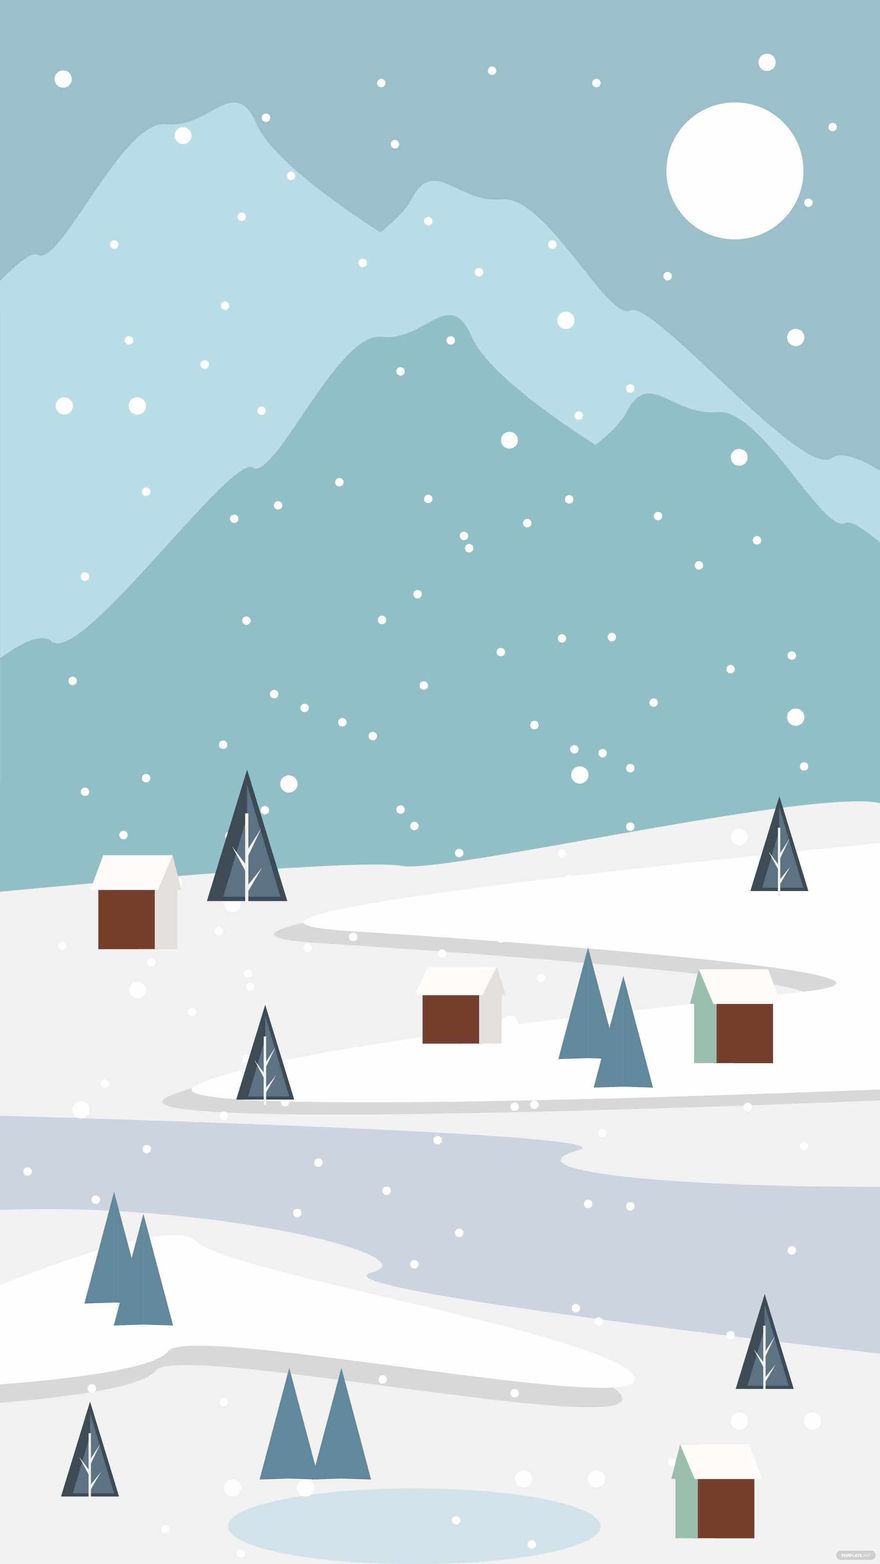 Free Winter Phone Background in Illustrator, EPS, SVG, JPG, PNG